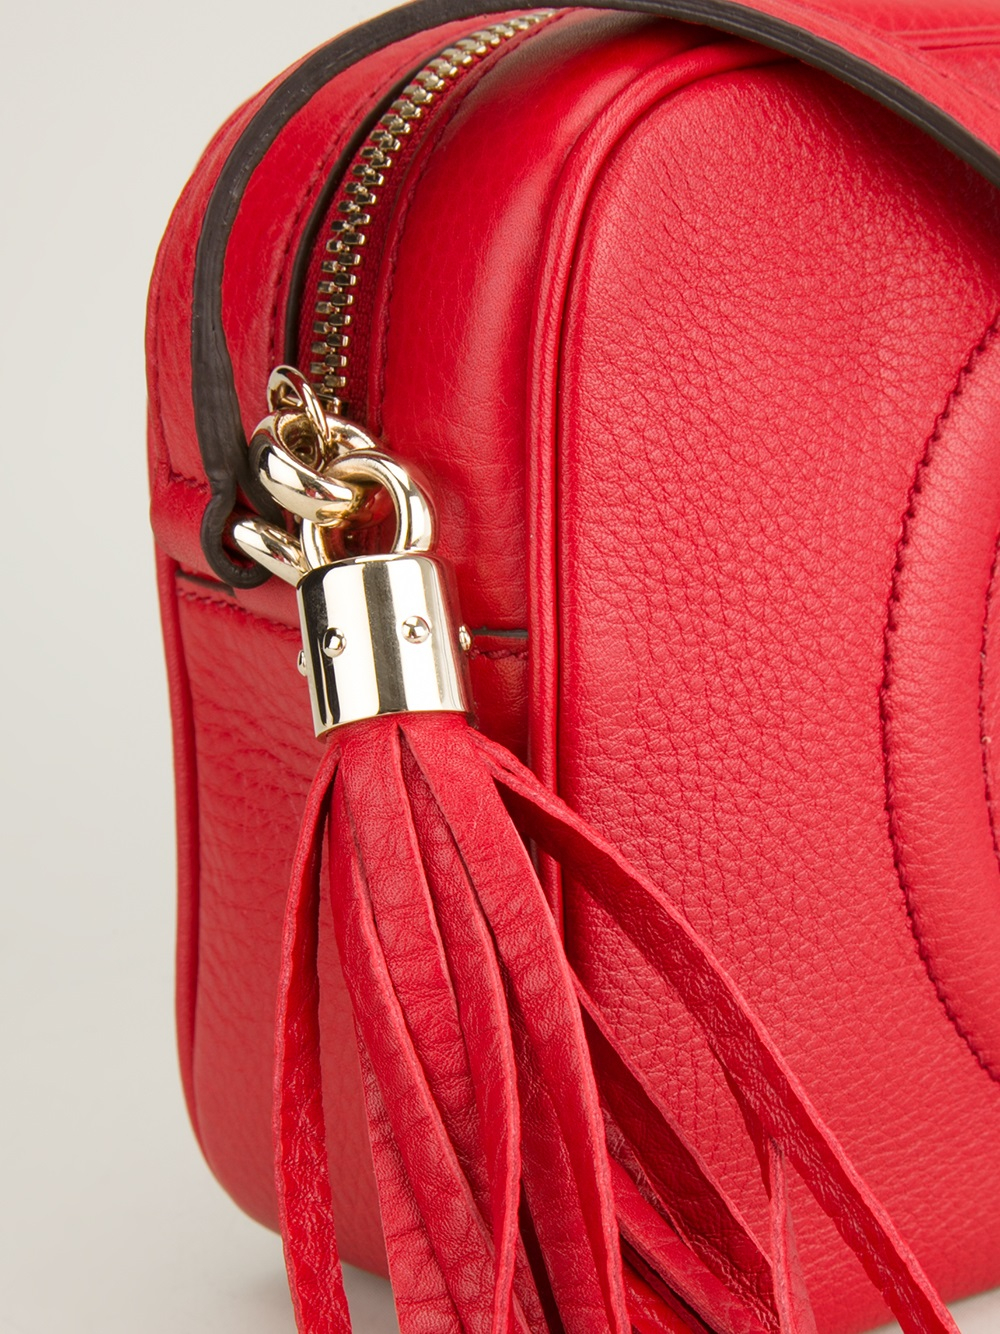 Lyst - Gucci Disco Bag in Red